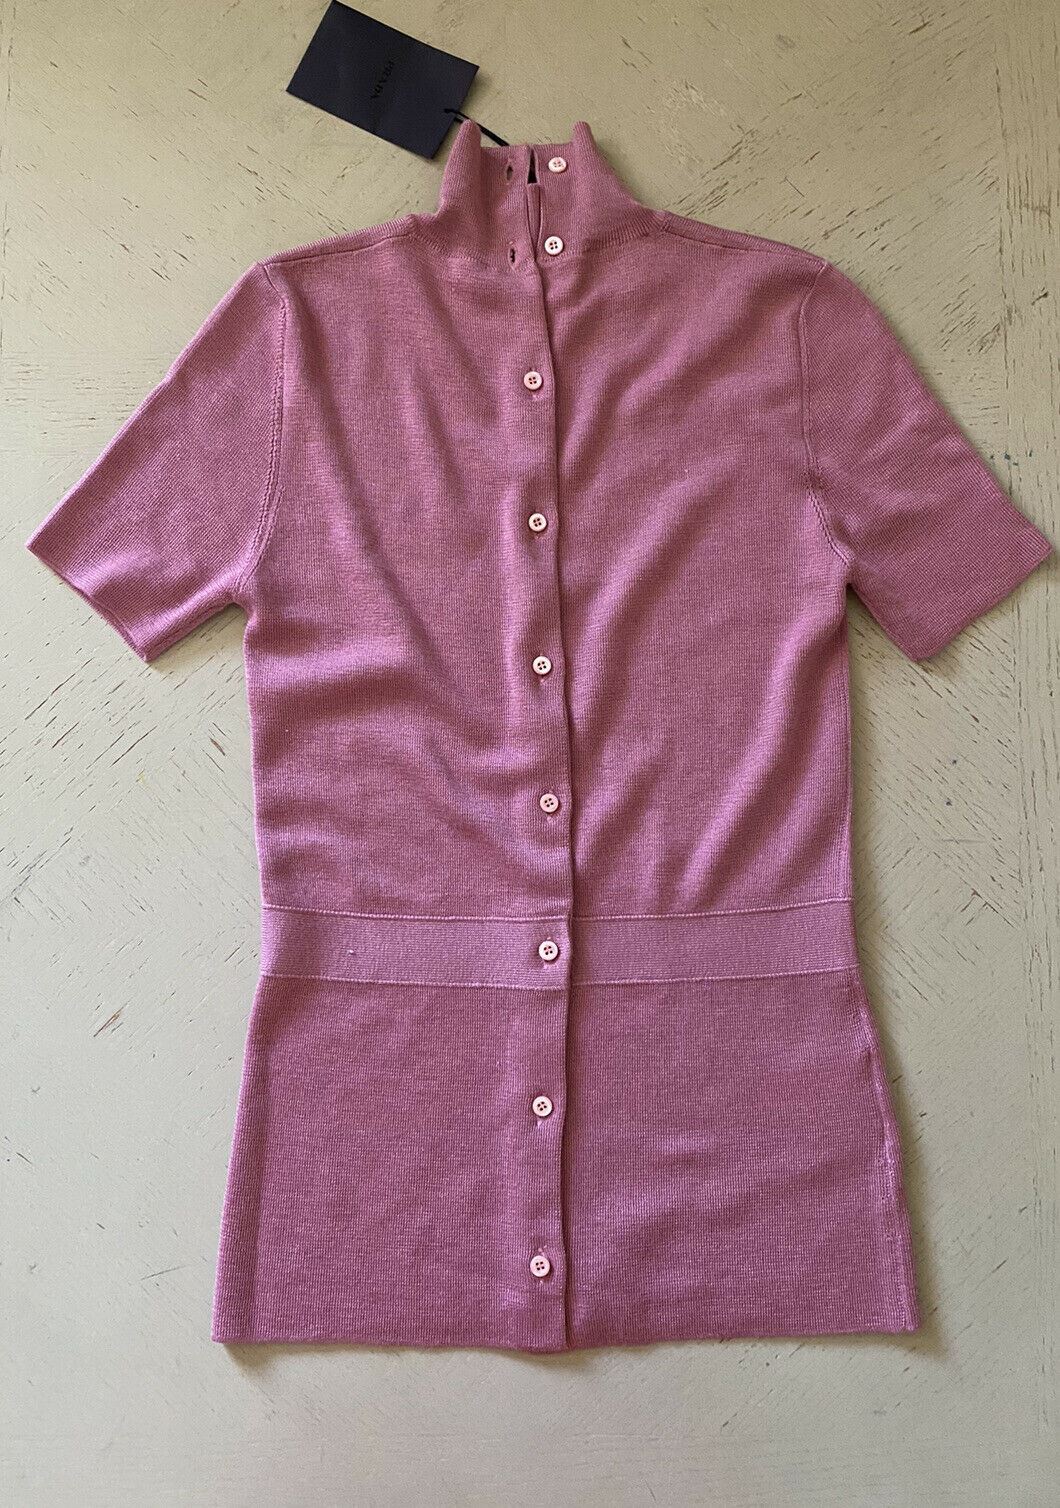 New $980 PRADA Women Cashmere/Silk Cardigan Sweater  Color GERANIUM 2/38 Italy